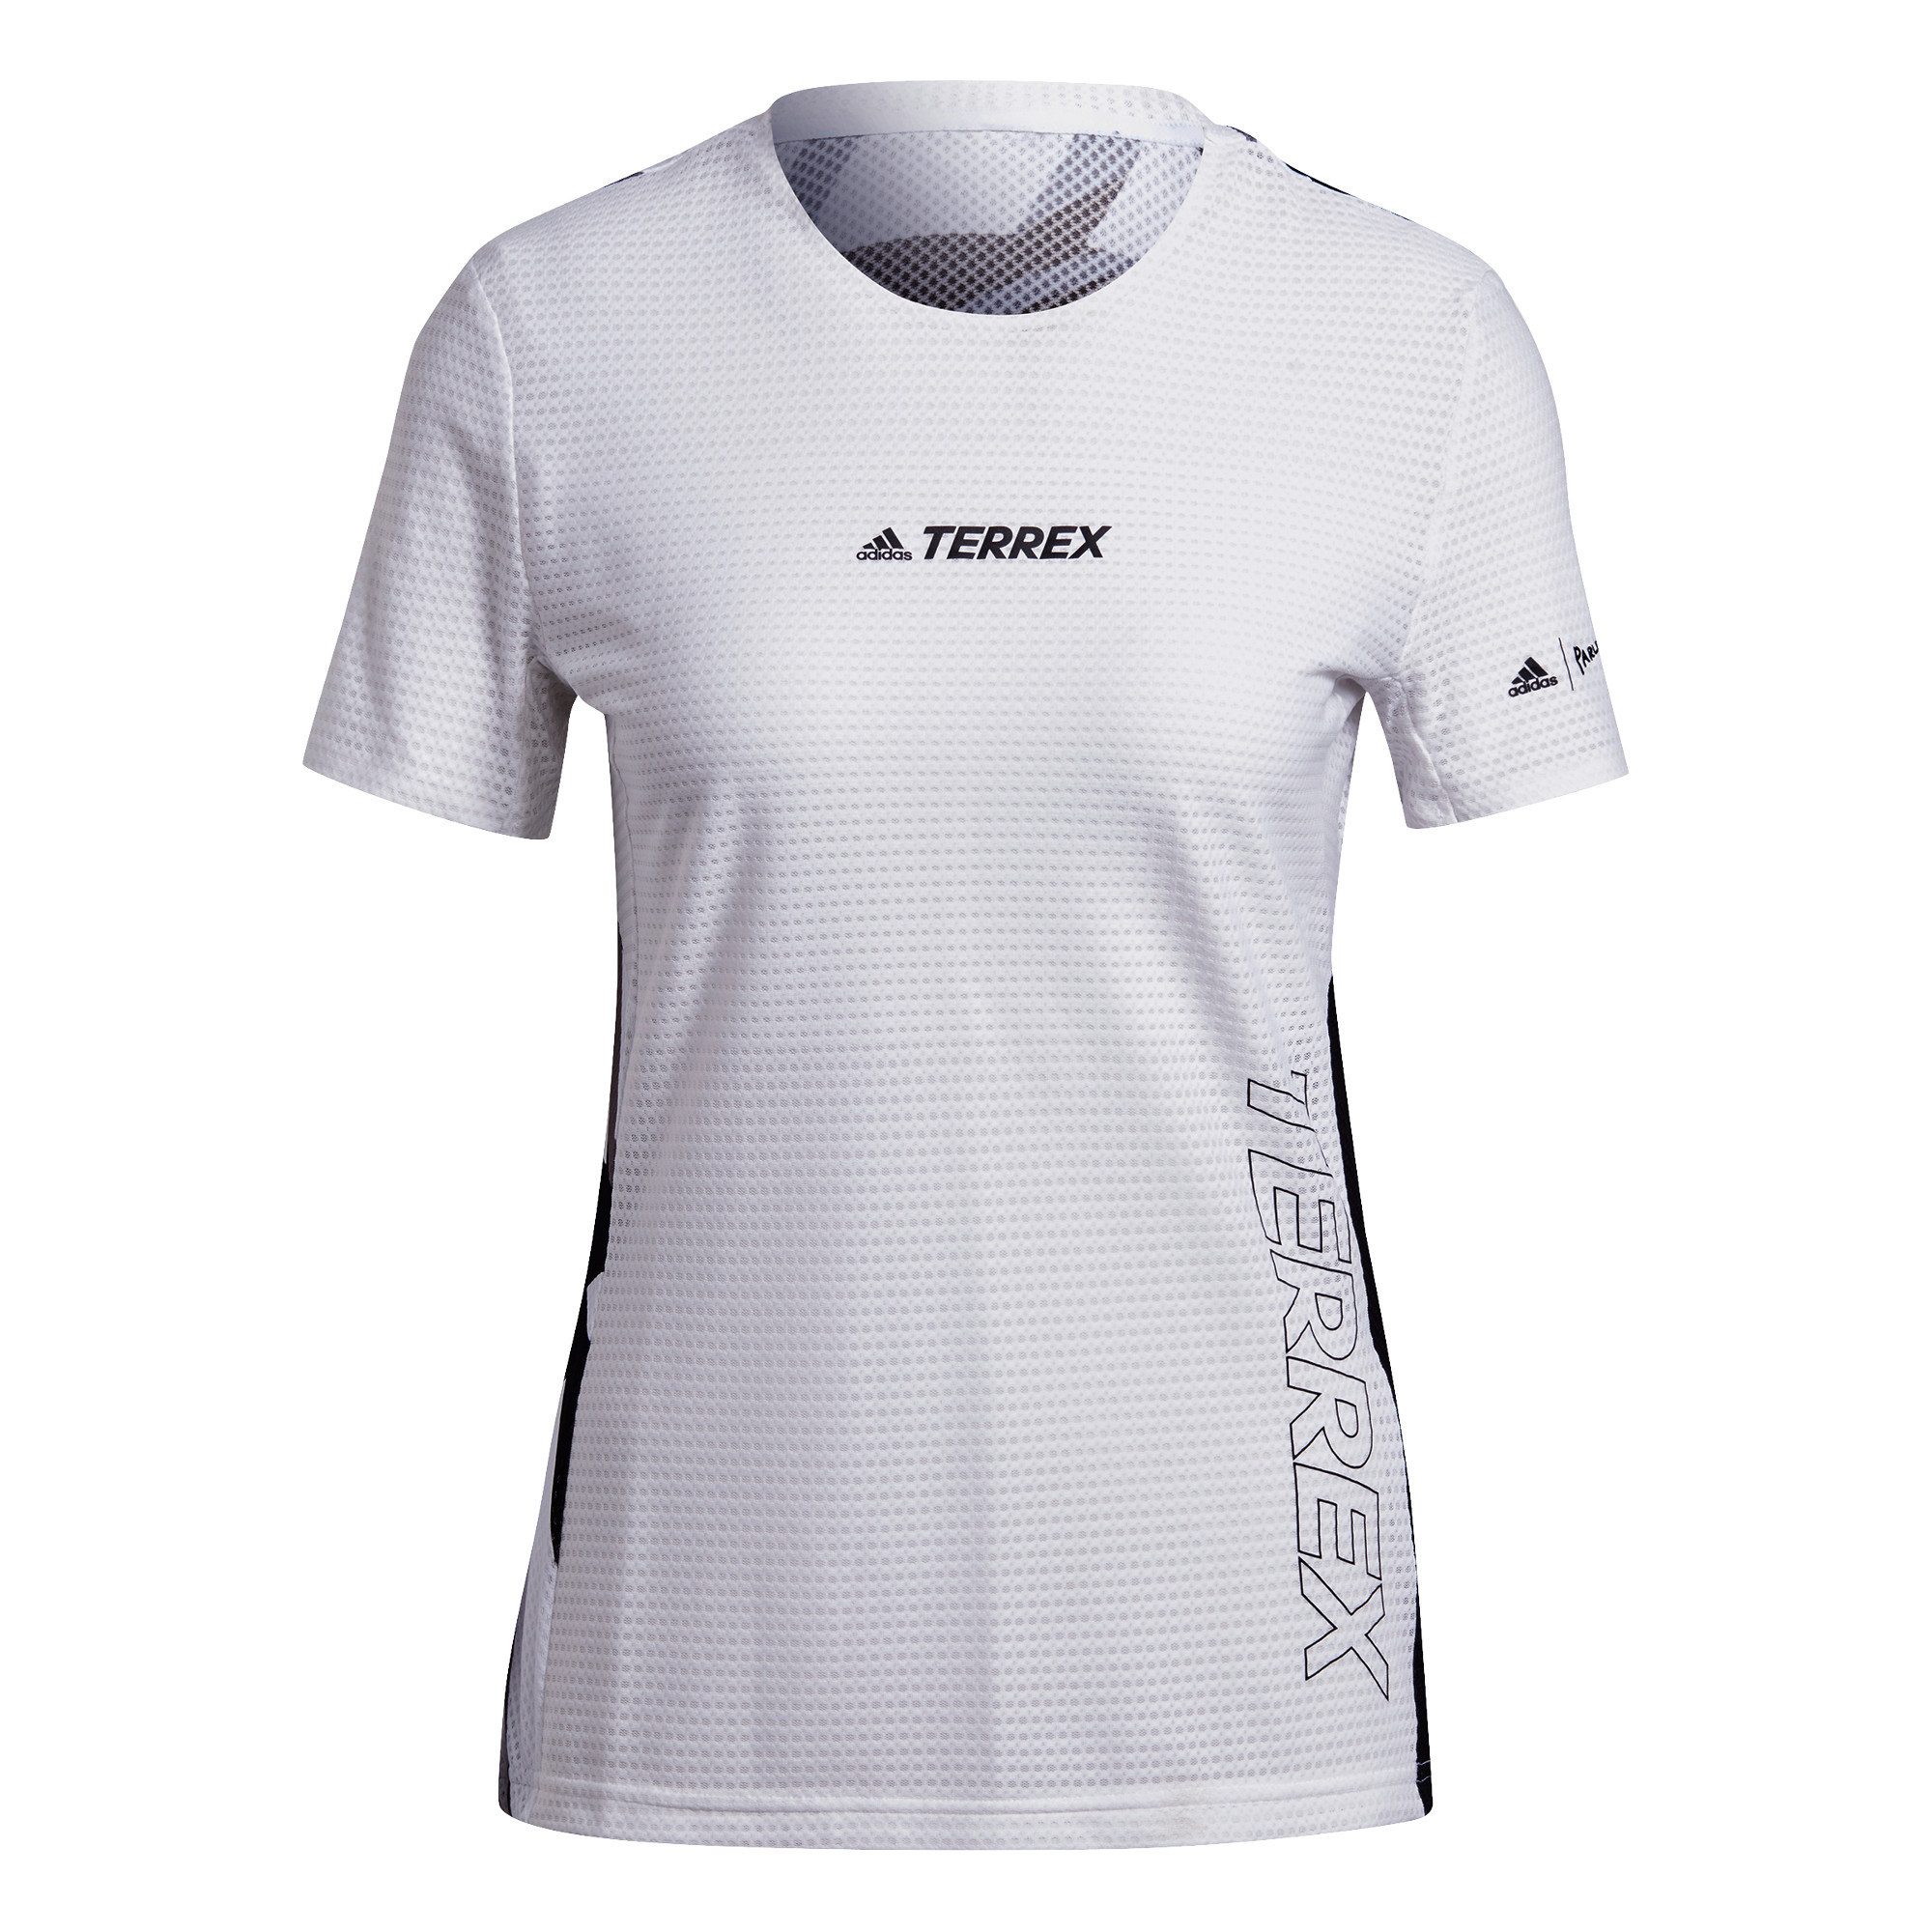 Adidas Adidas Women's Terrex Parley Agravic TR Pro T-shirt White/Black XS, WHITE/BLACK